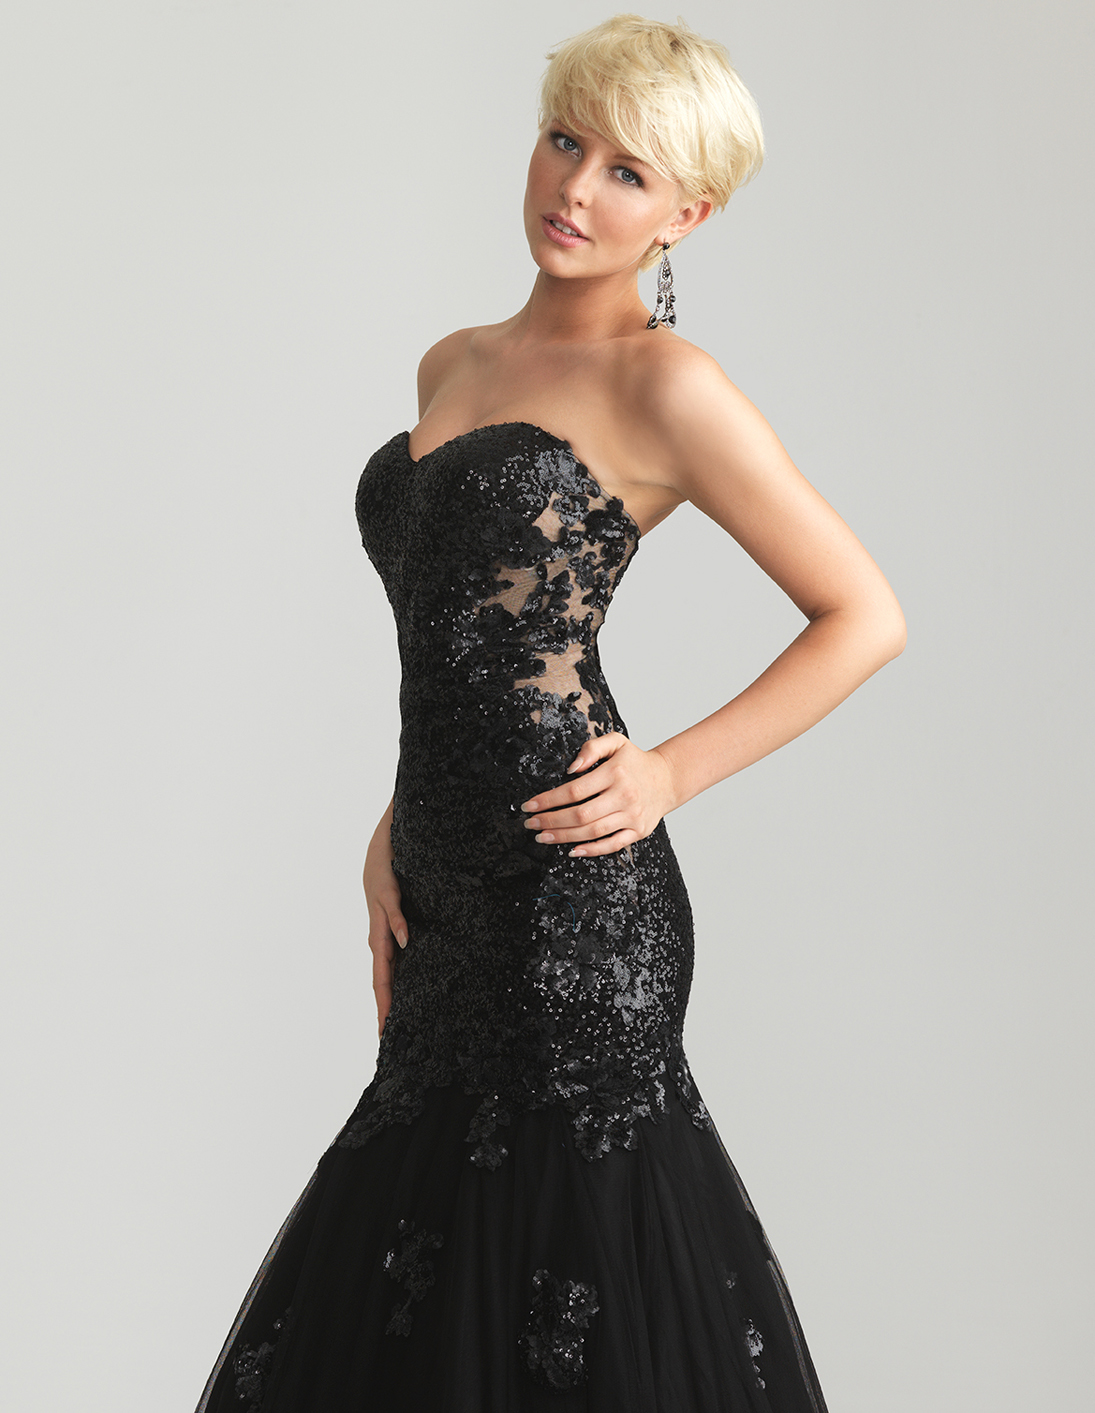 Strapless Black Sequin Dress - Better Choice 2017